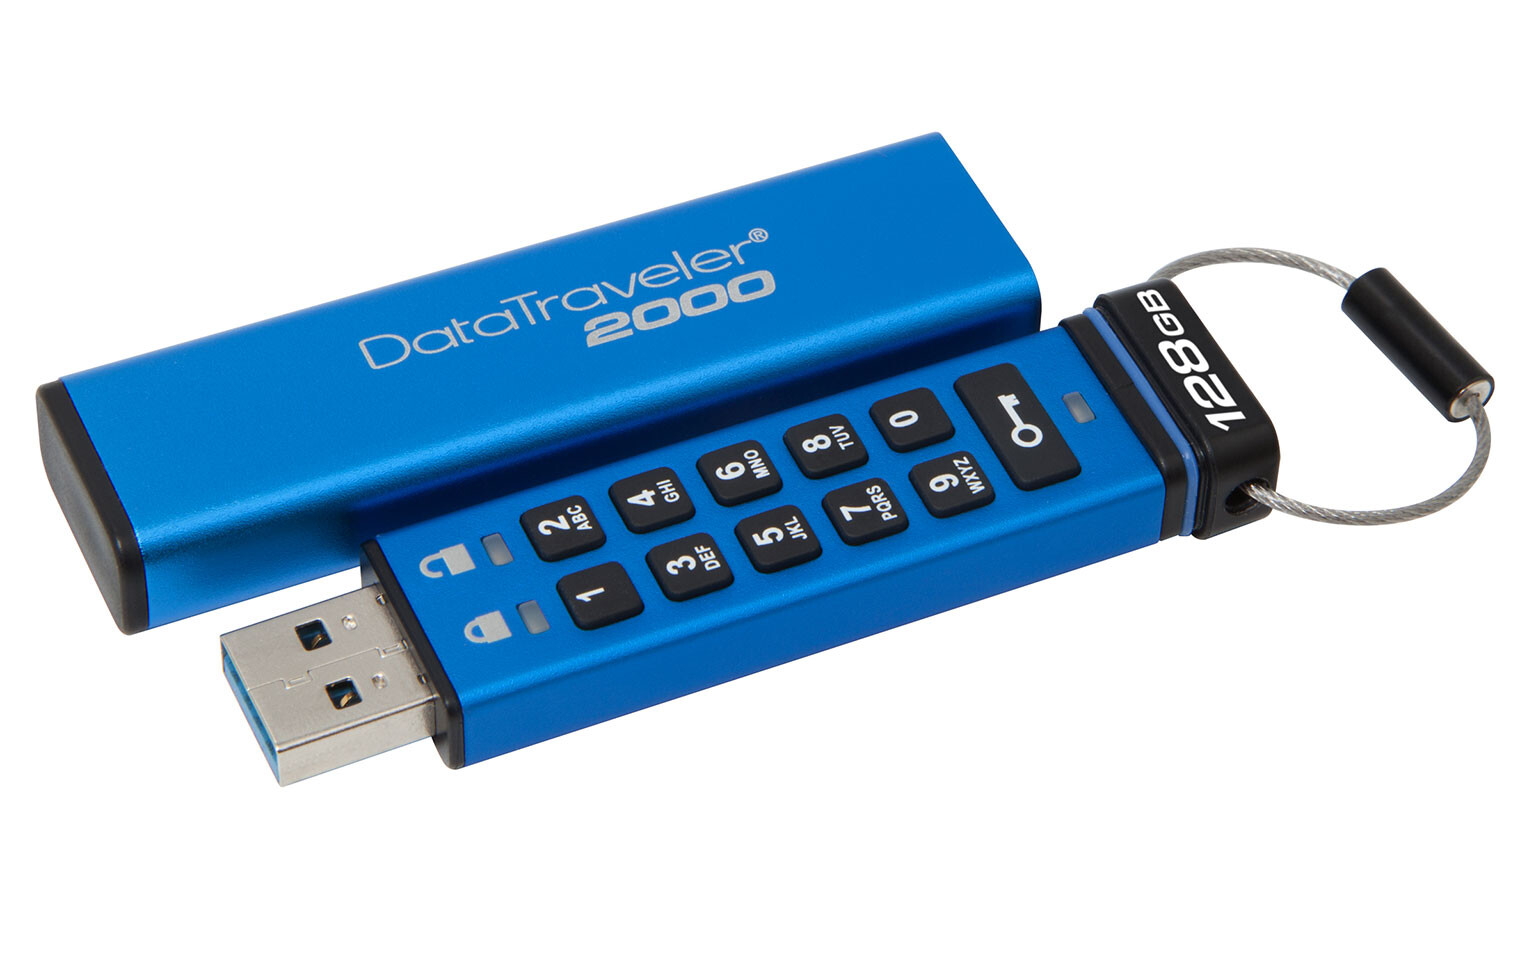 Kingston DataTraveler 2000 USB